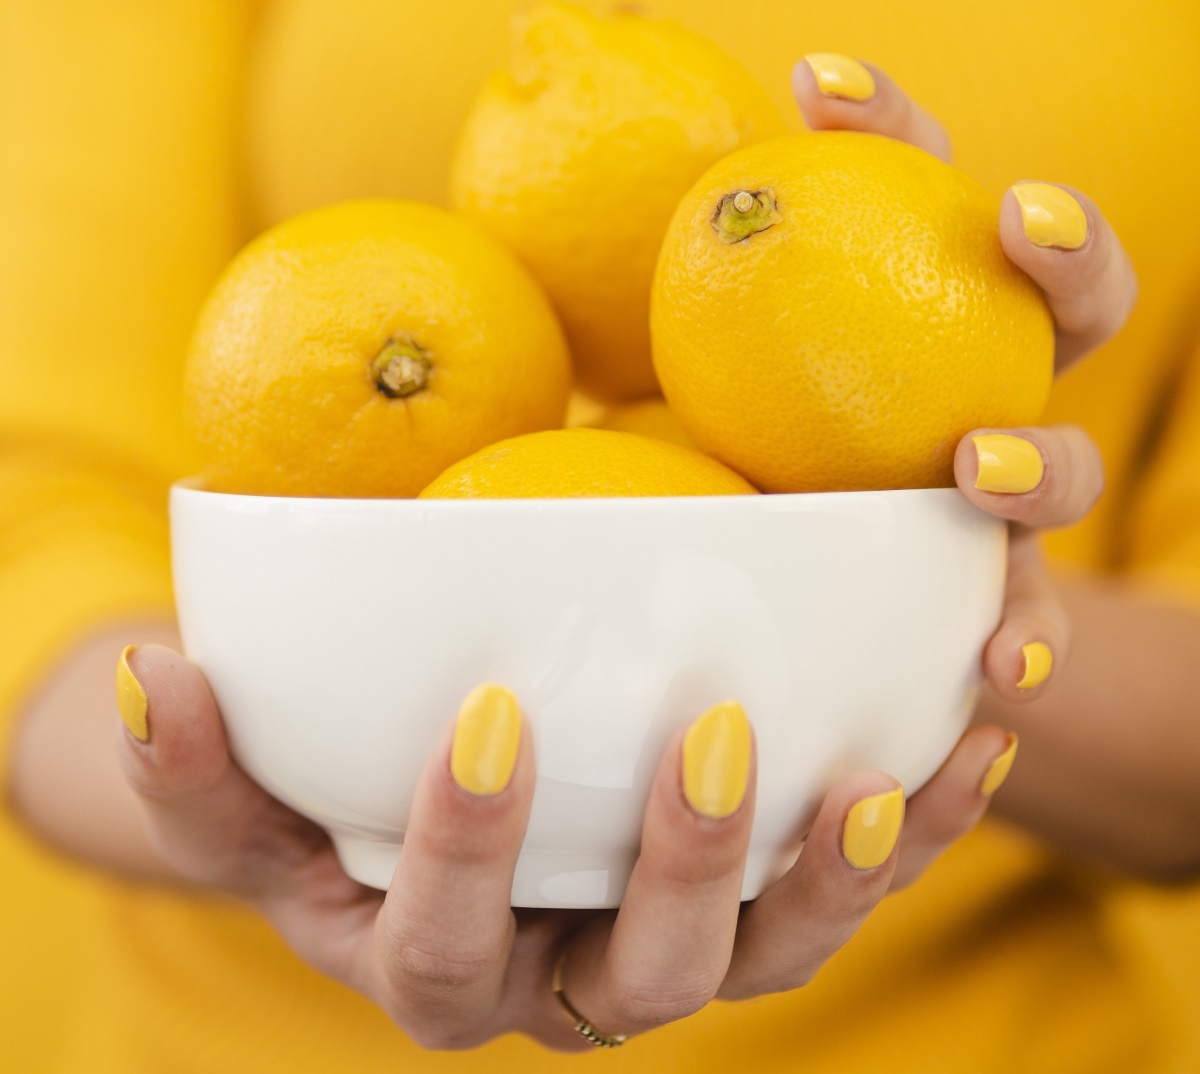 Buah yang Kaya Vitamin C, Ini Dia 6 Manfaat Lemon untuk Ibu Hamil yang Wajib Bunda Ketahui dan Manfaatkan